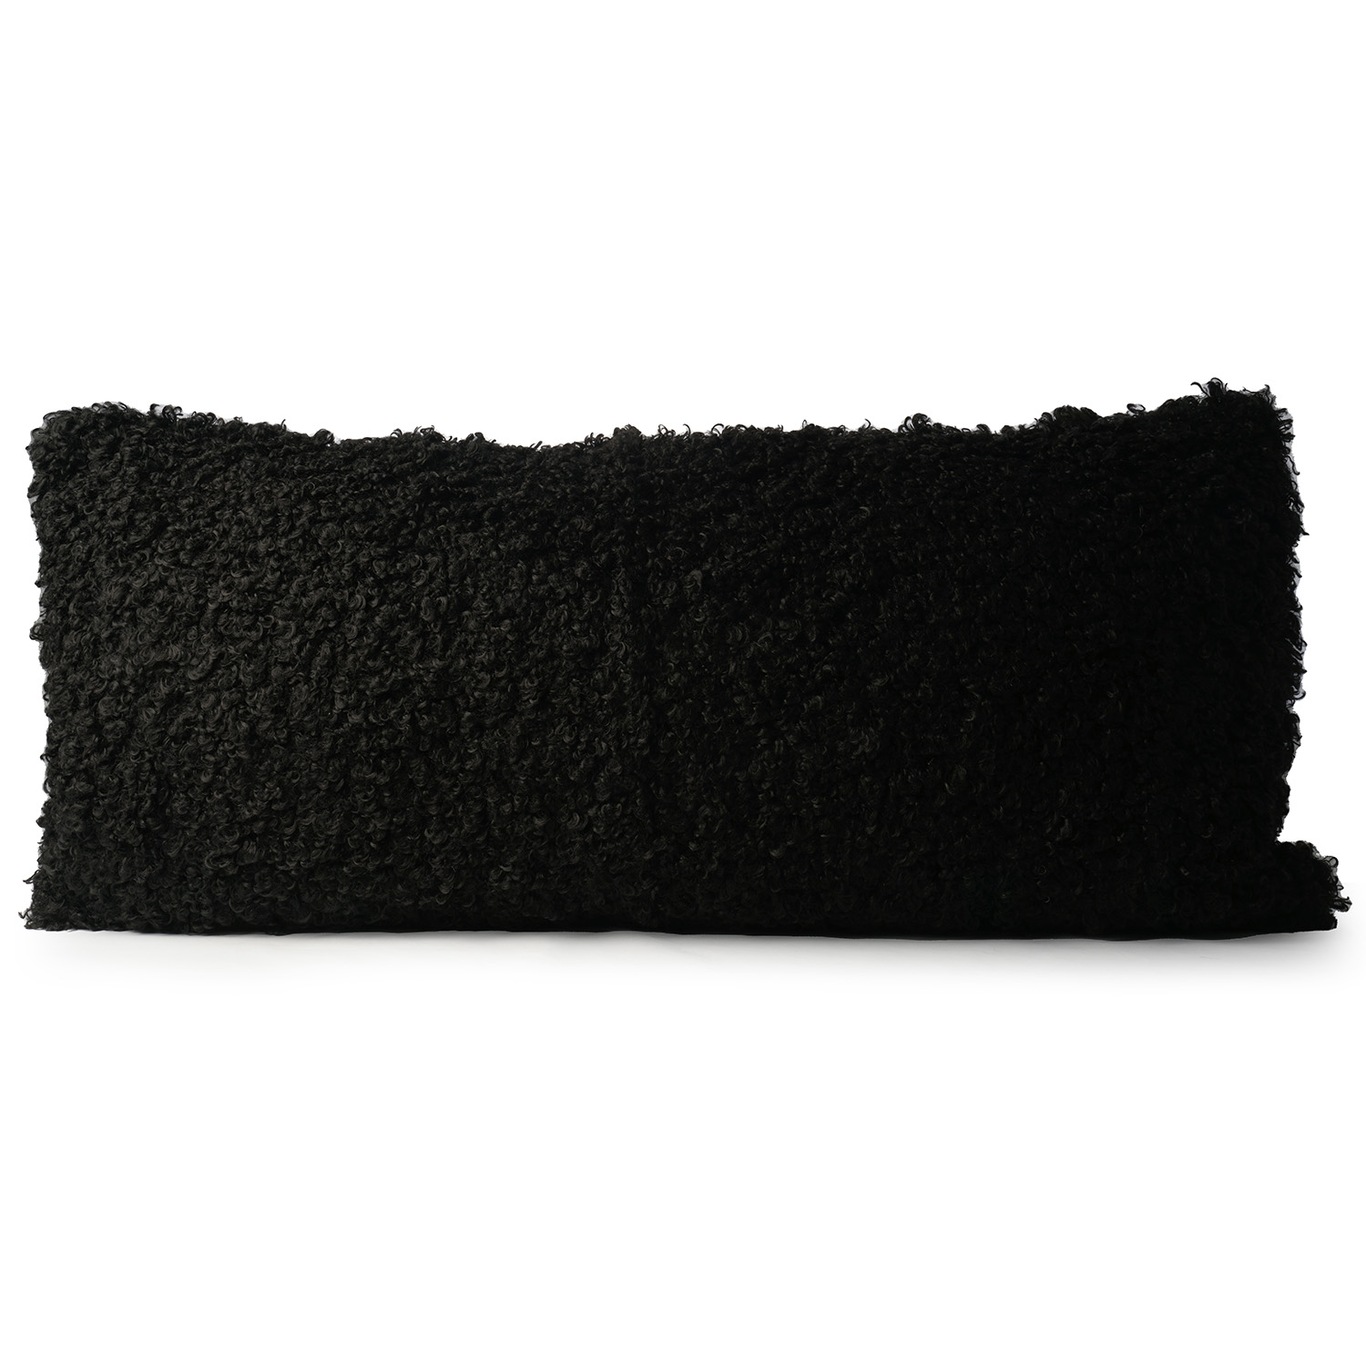 Curly Lamb Cushion Cover Black, 40x90 cm